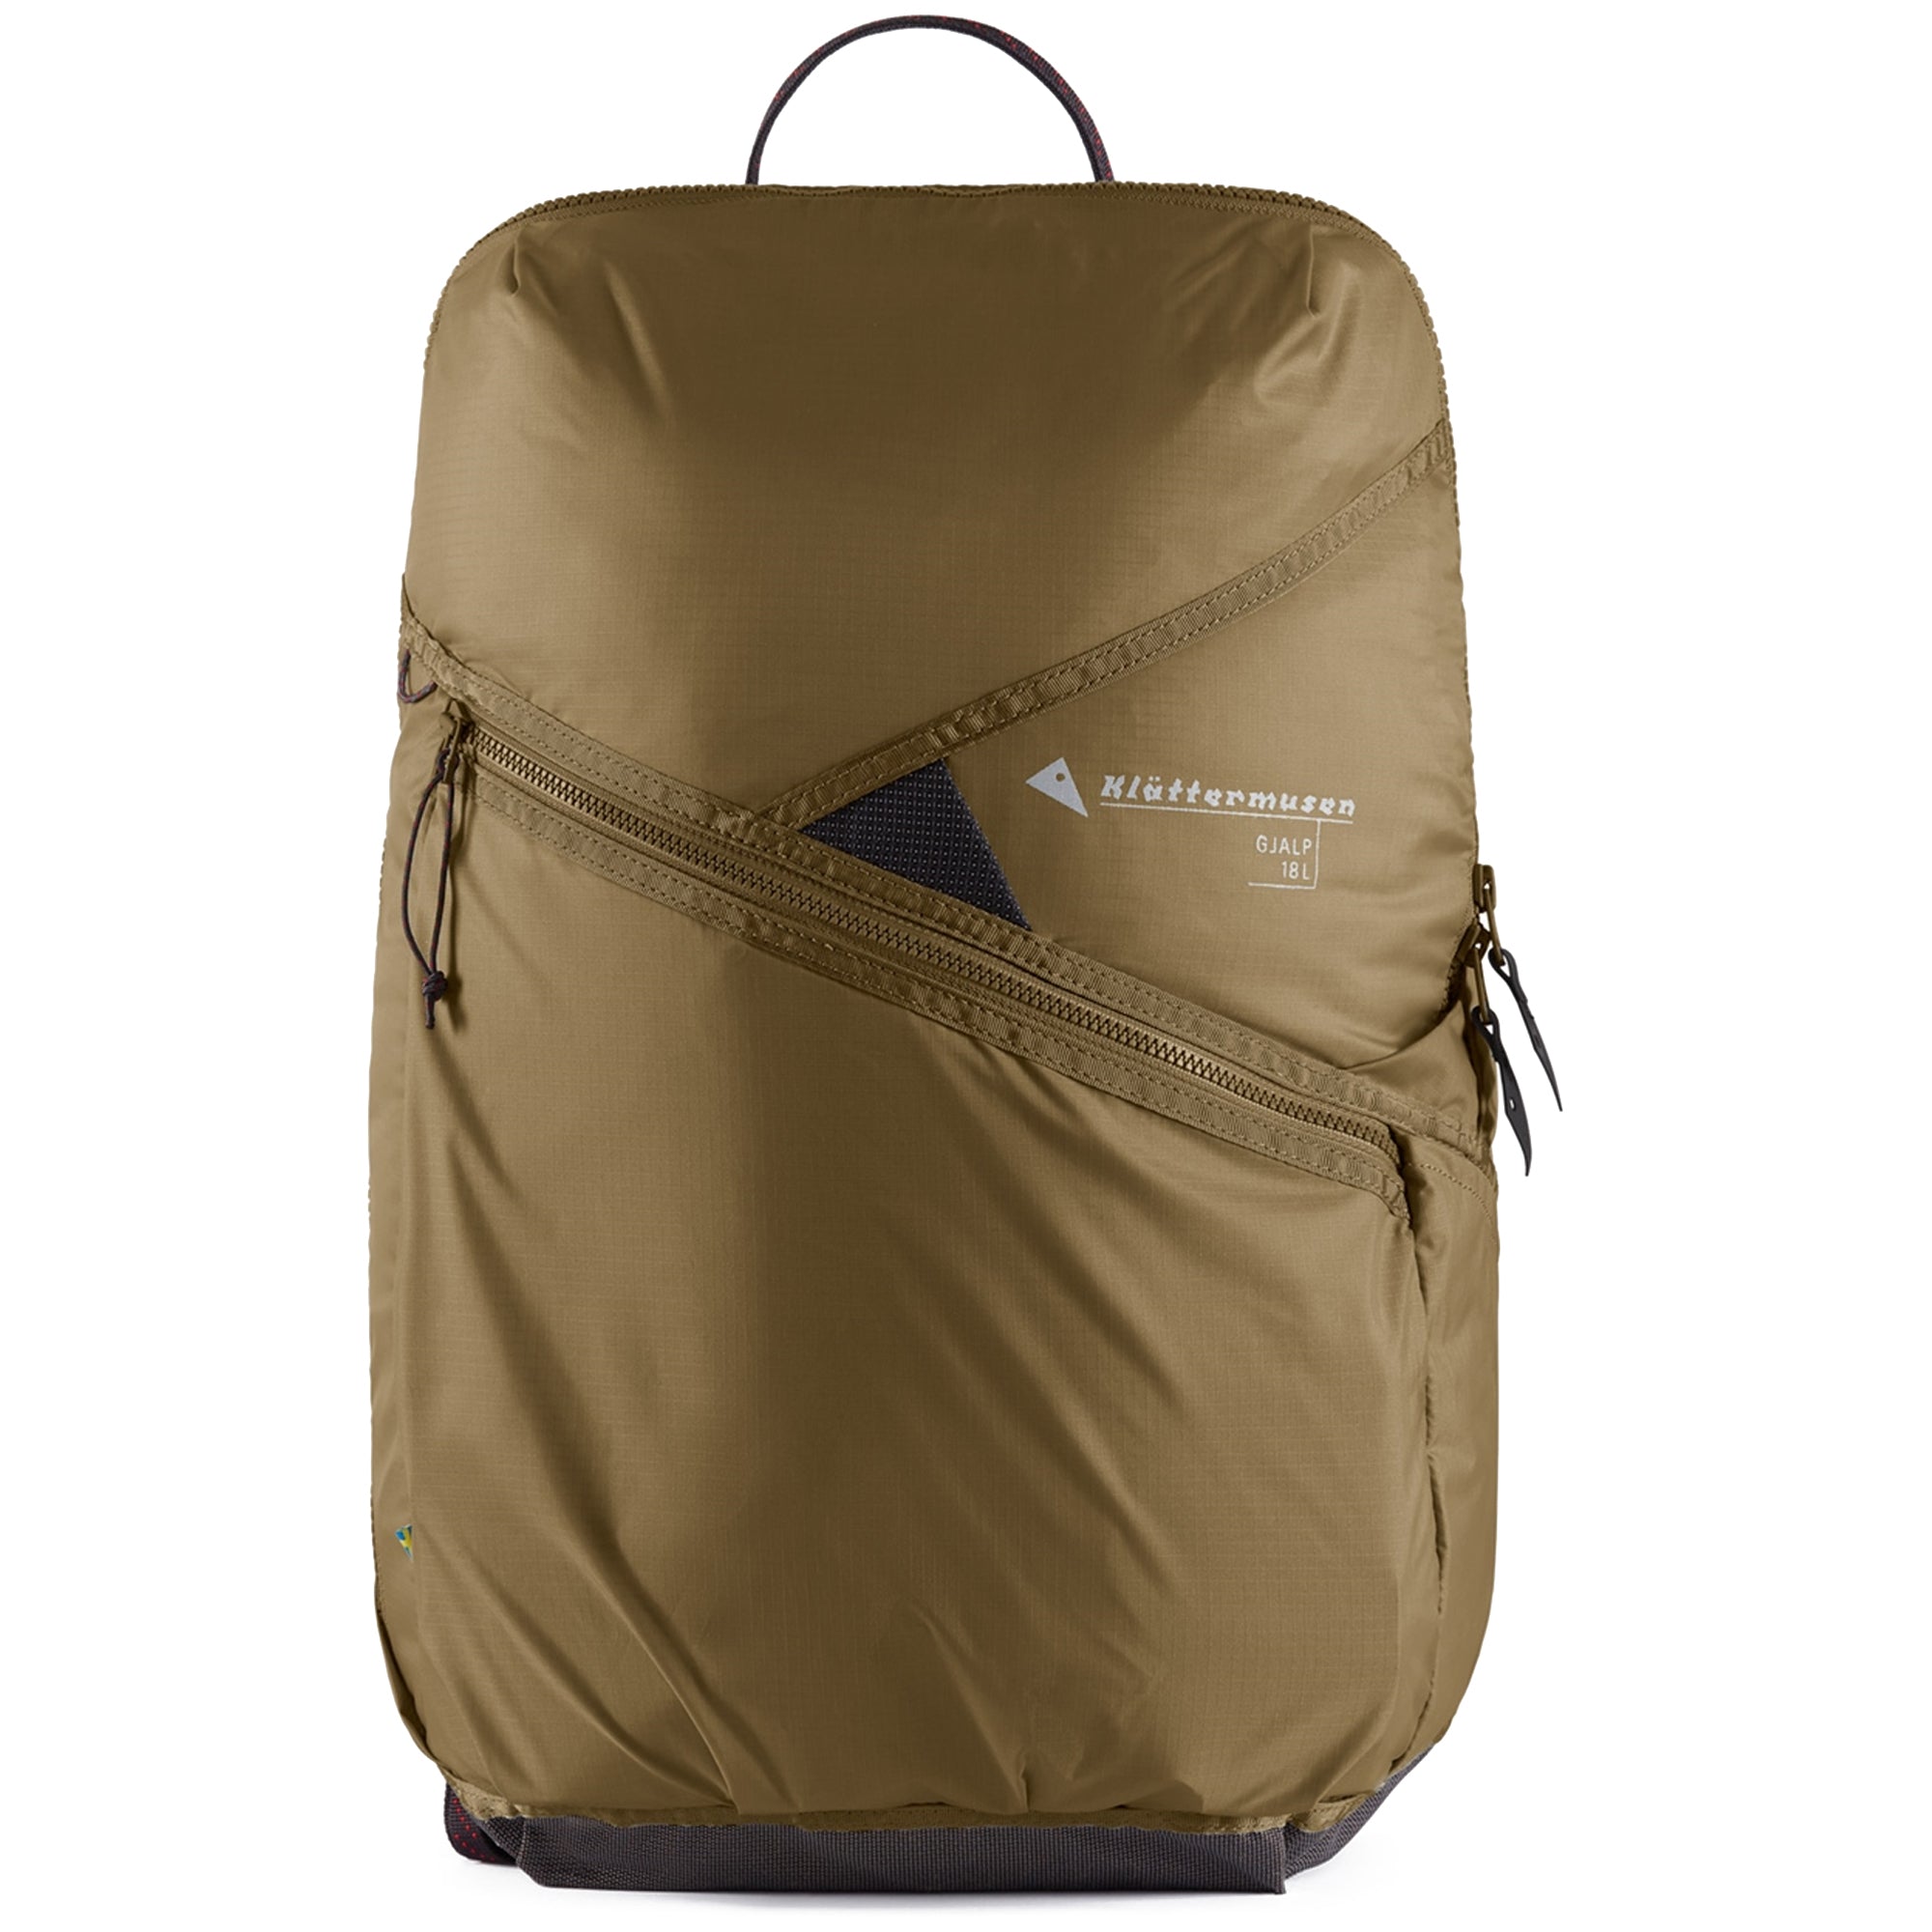 Klattermusen Gjalp Backpack 18L - Olive